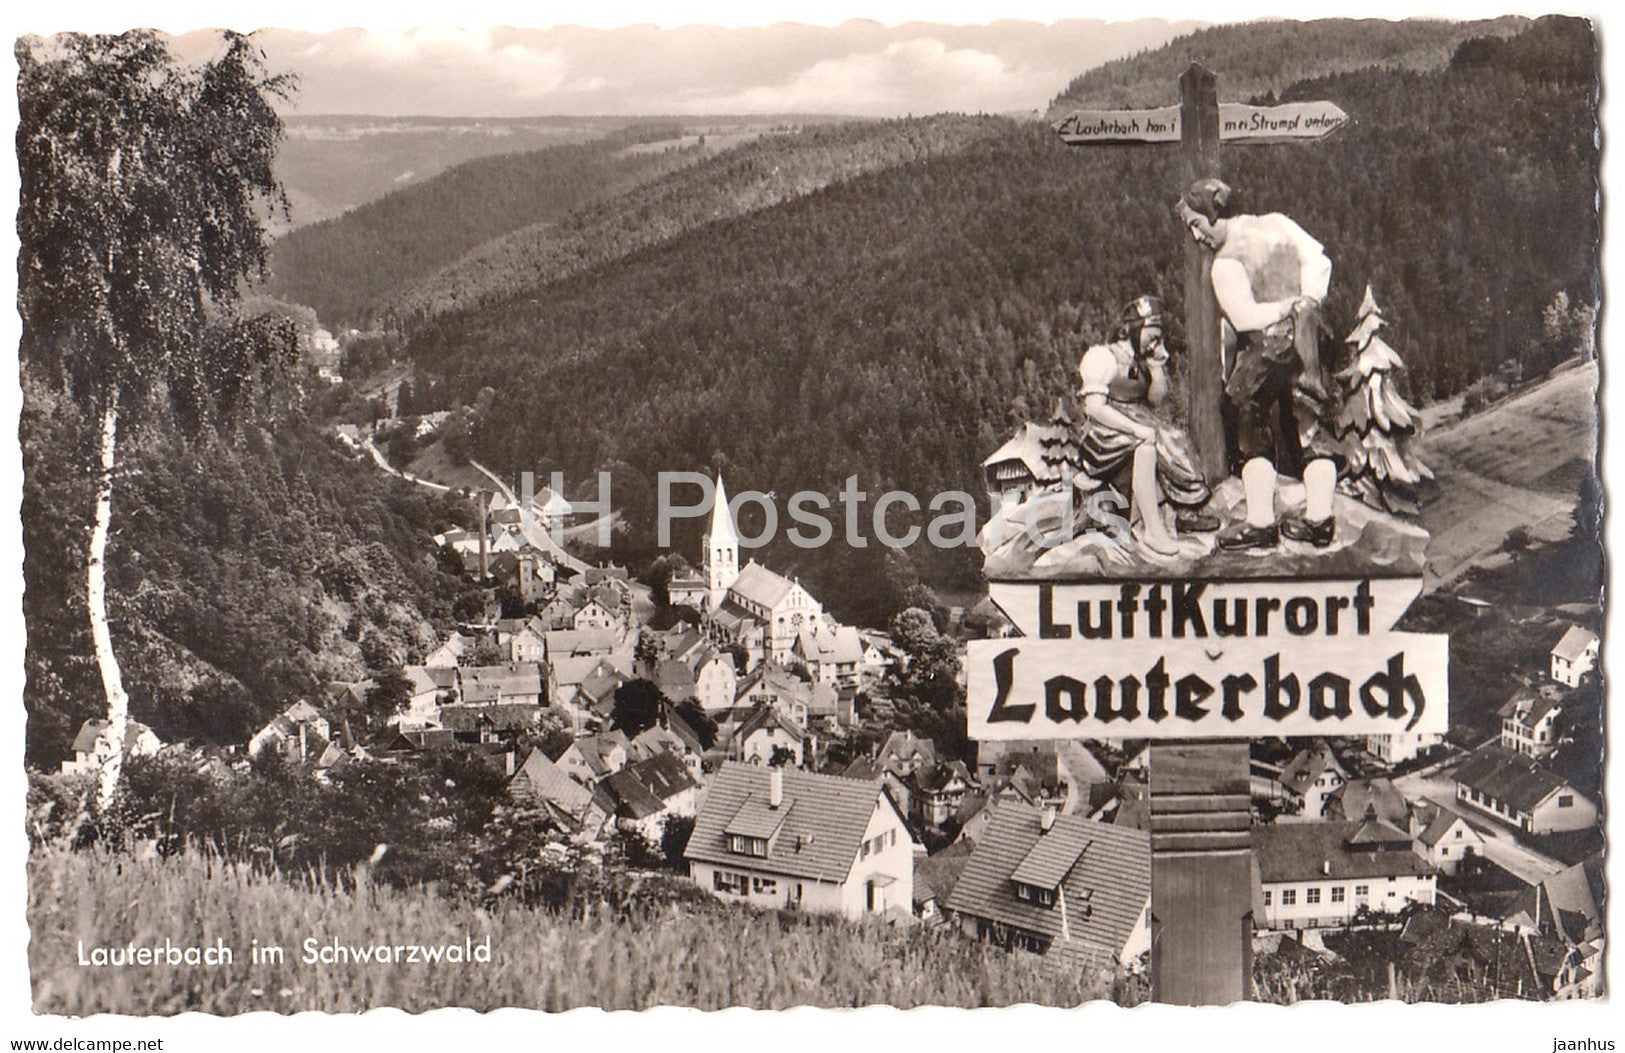 Lauterbach im Schwarzwald - 1958 - Germany - used - JH Postcards